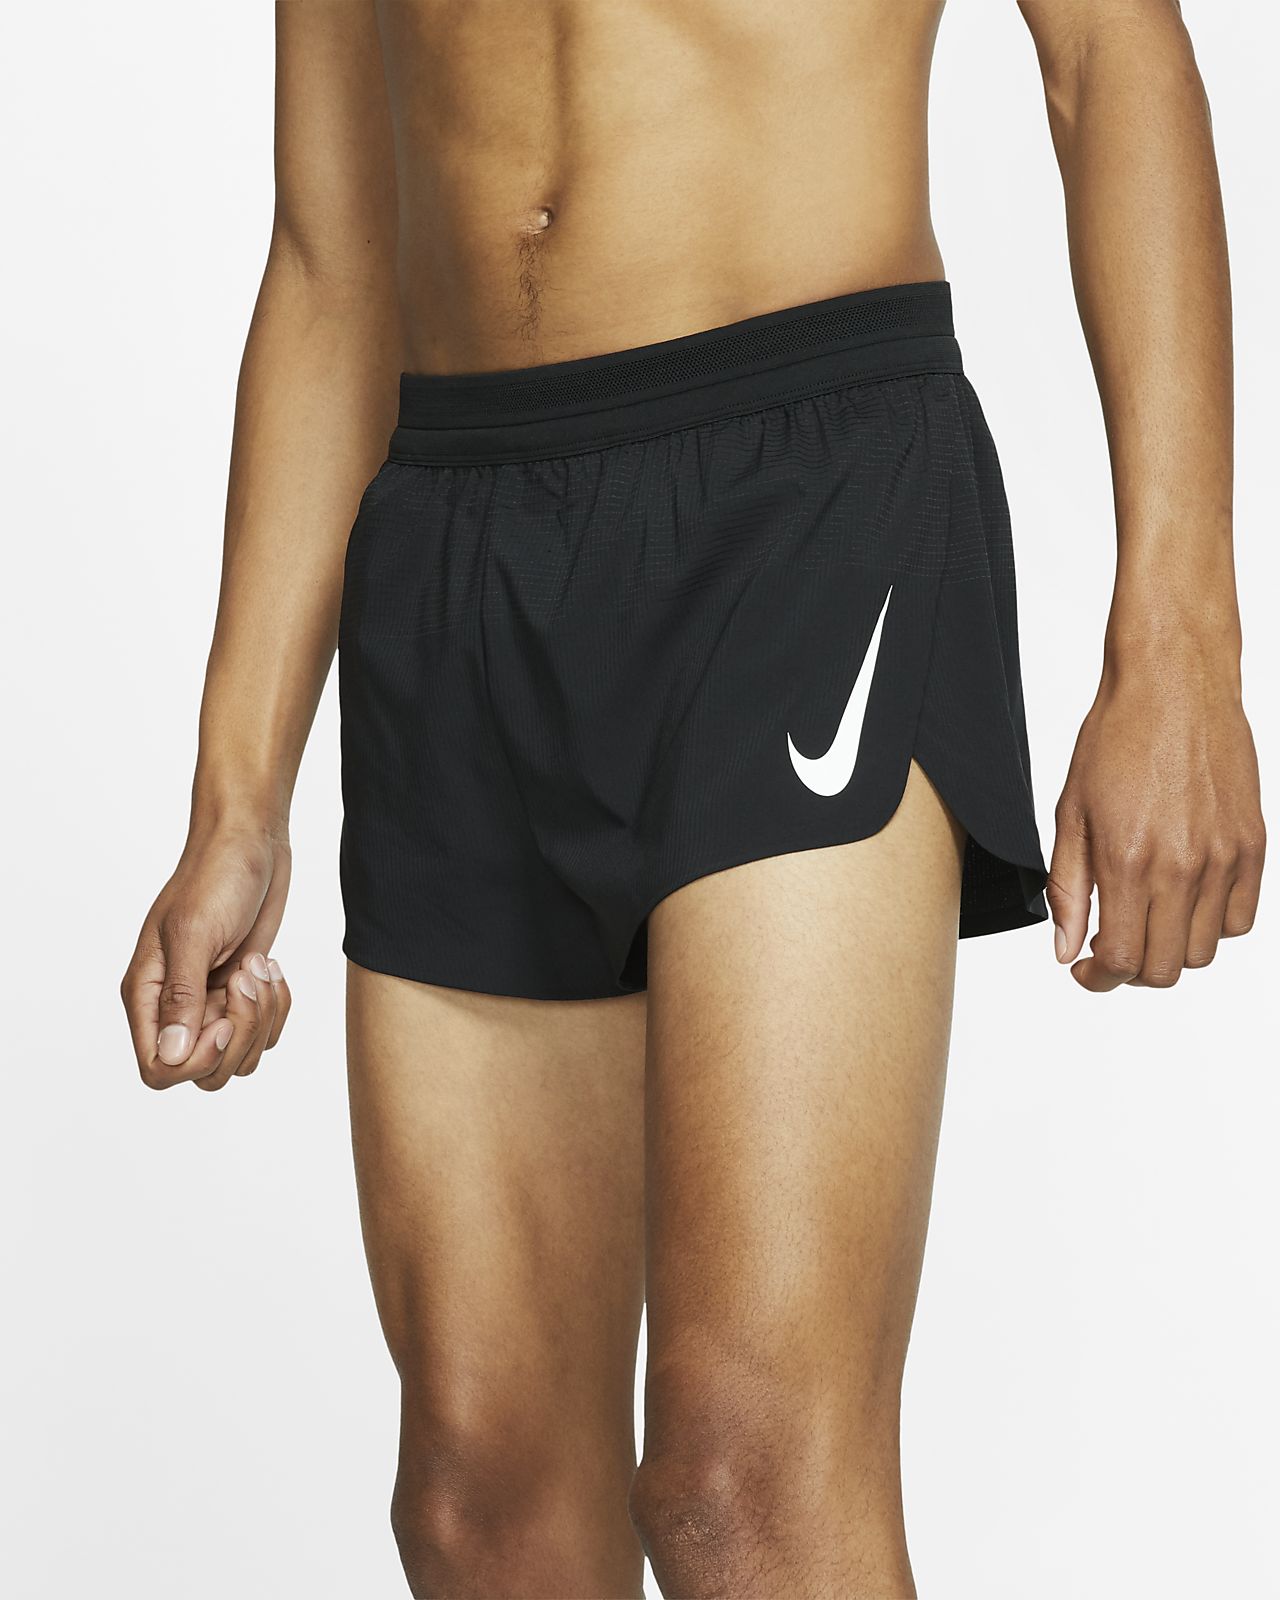 Nike Men S Compression Shorts Size Chart